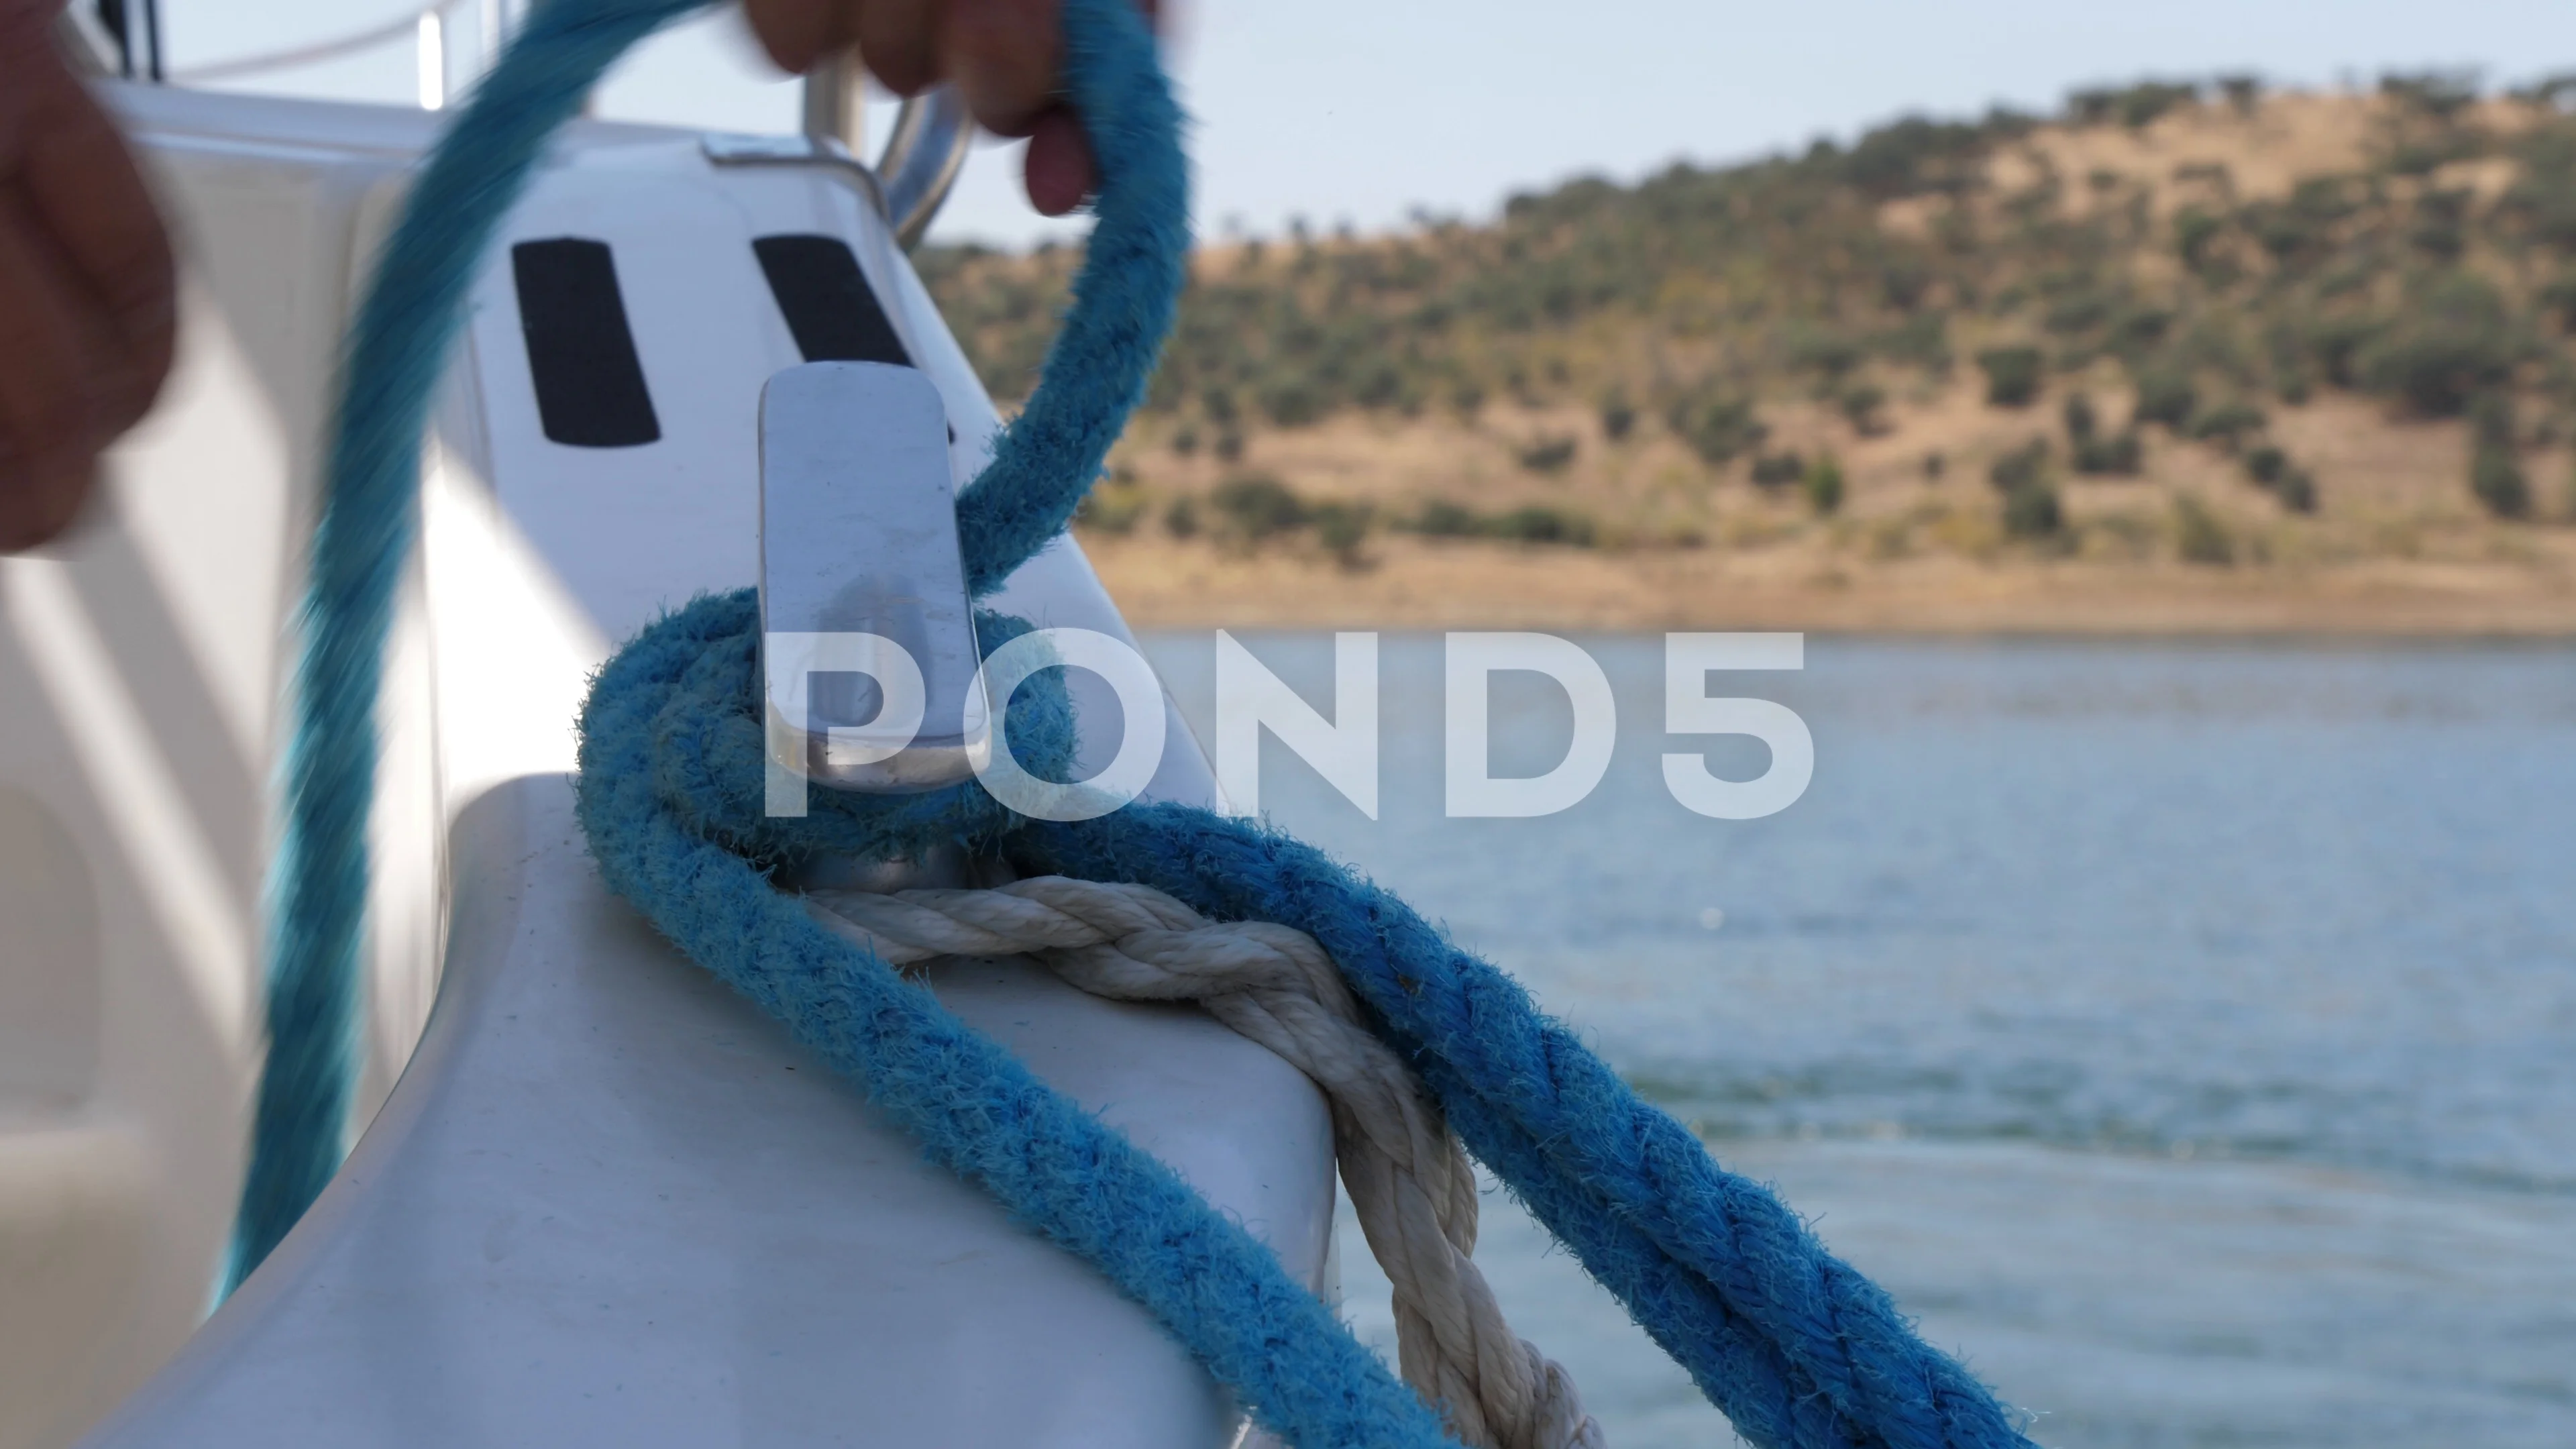 https://images.pond5.com/boat-rope-anchor-ship-sea-footage-077890672_prevstill.jpeg